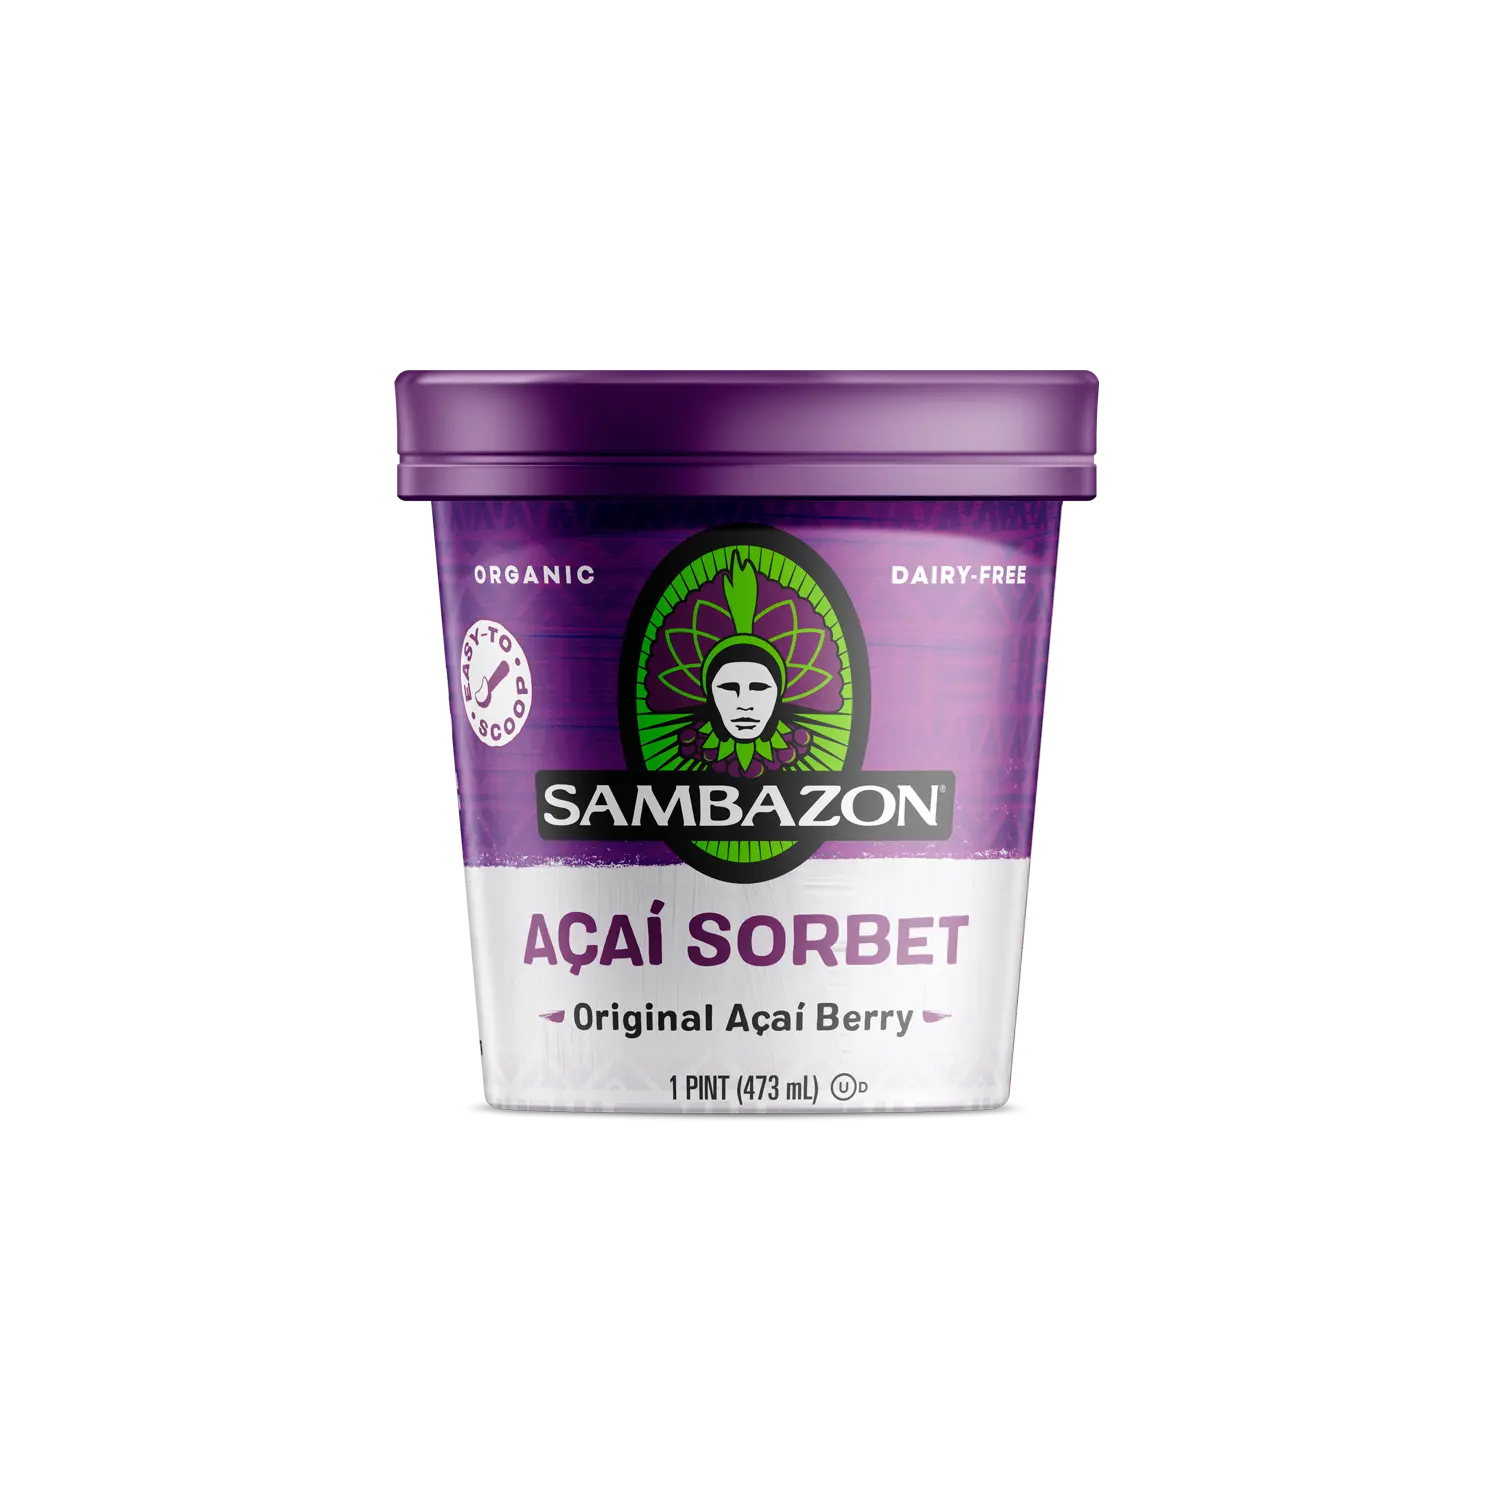 Organic & Dairy-Free Frozen Acai Berry Sorbet | SAMBAZON